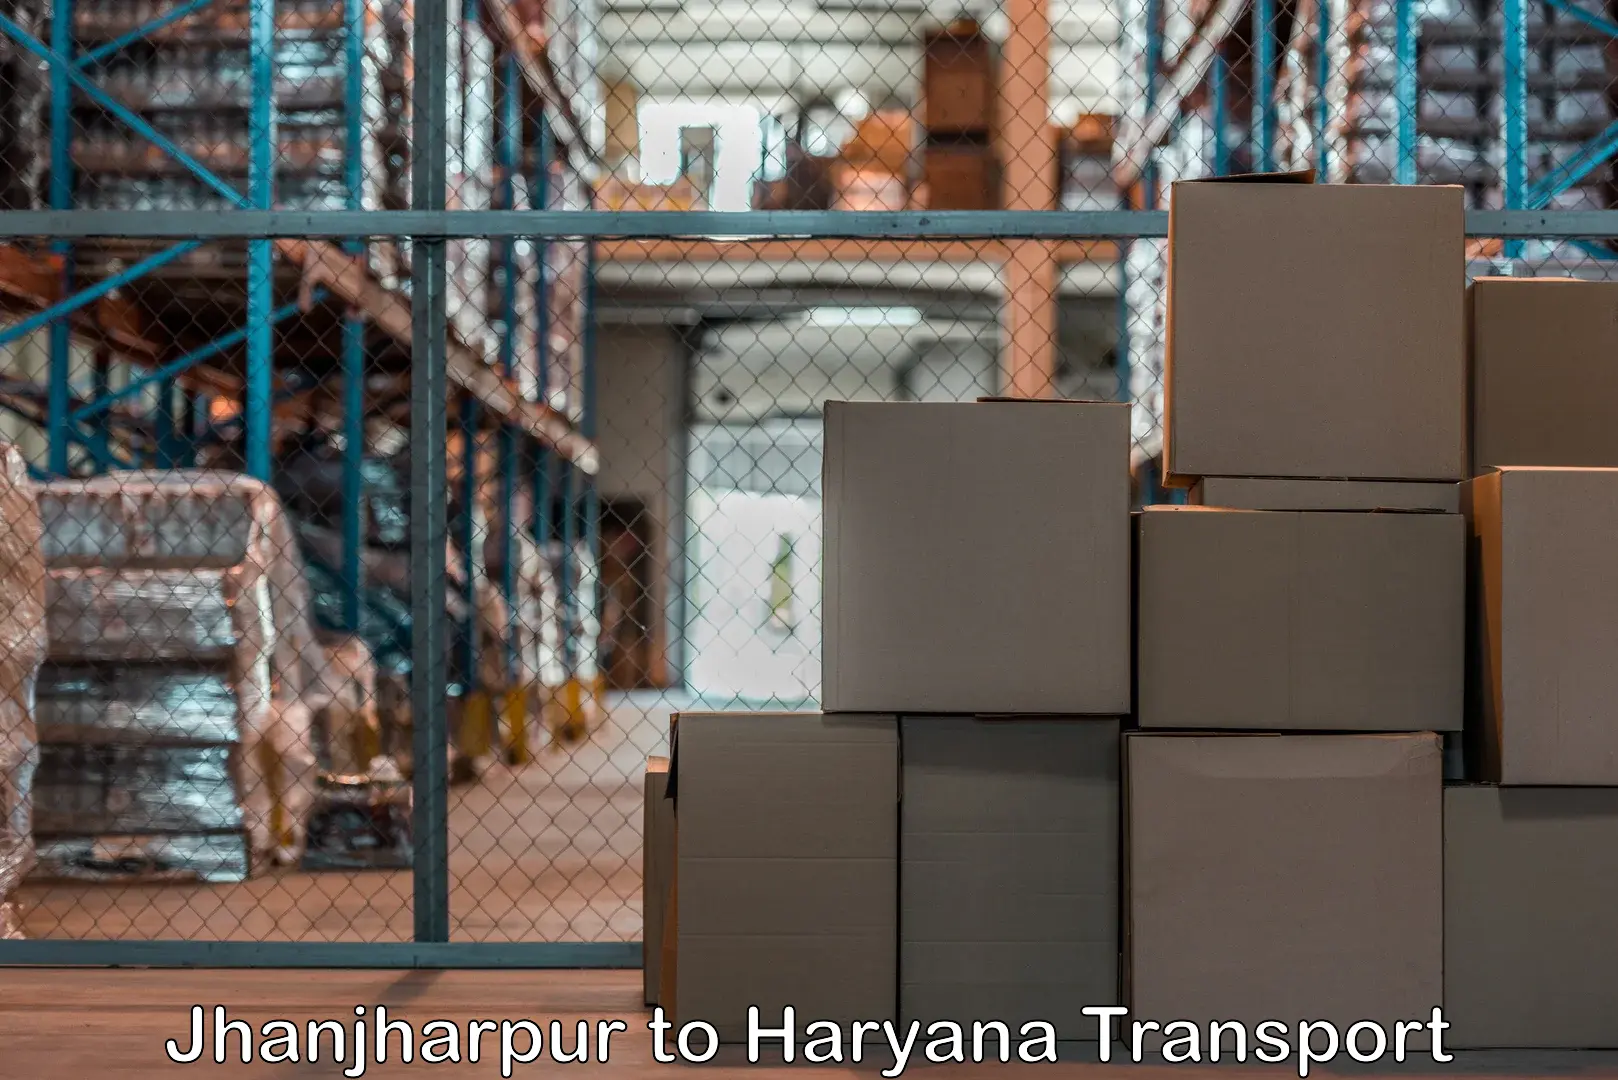 Shipping partner Jhanjharpur to Sonipat